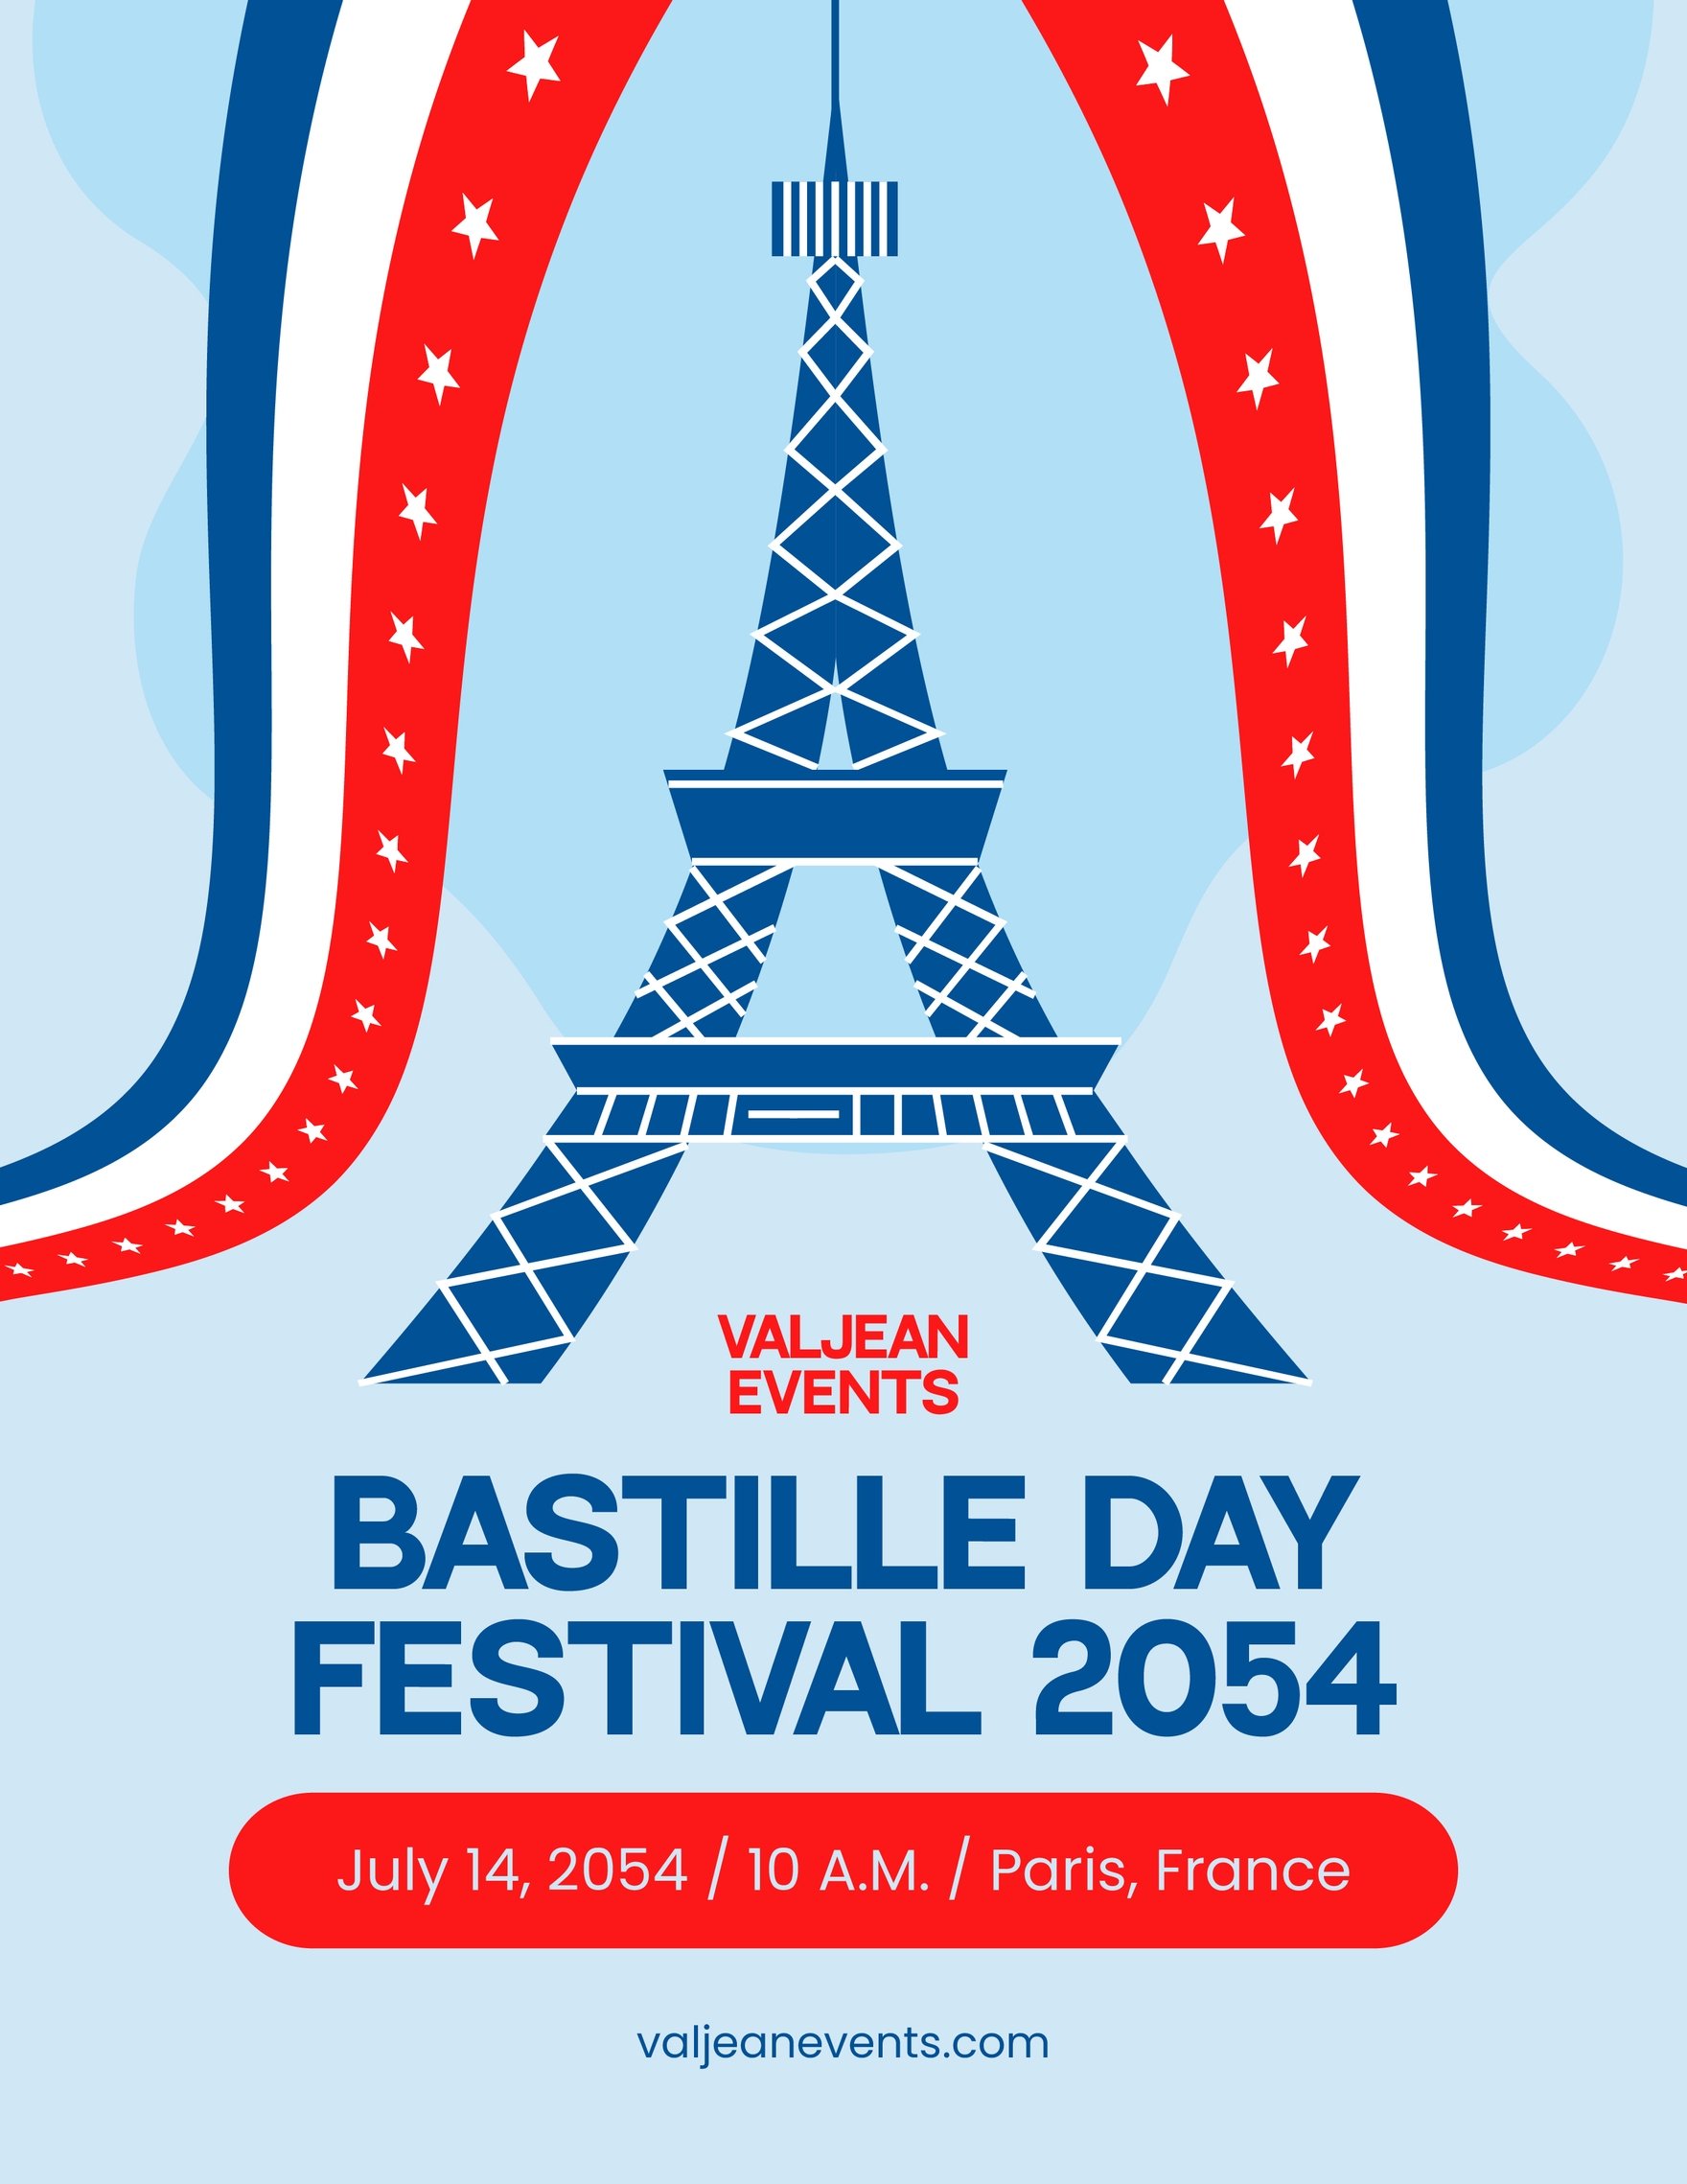 Free Bastille Day Festival Flyer in Word, Google Docs, Illustrator, PSD, Apple Pages, Publisher